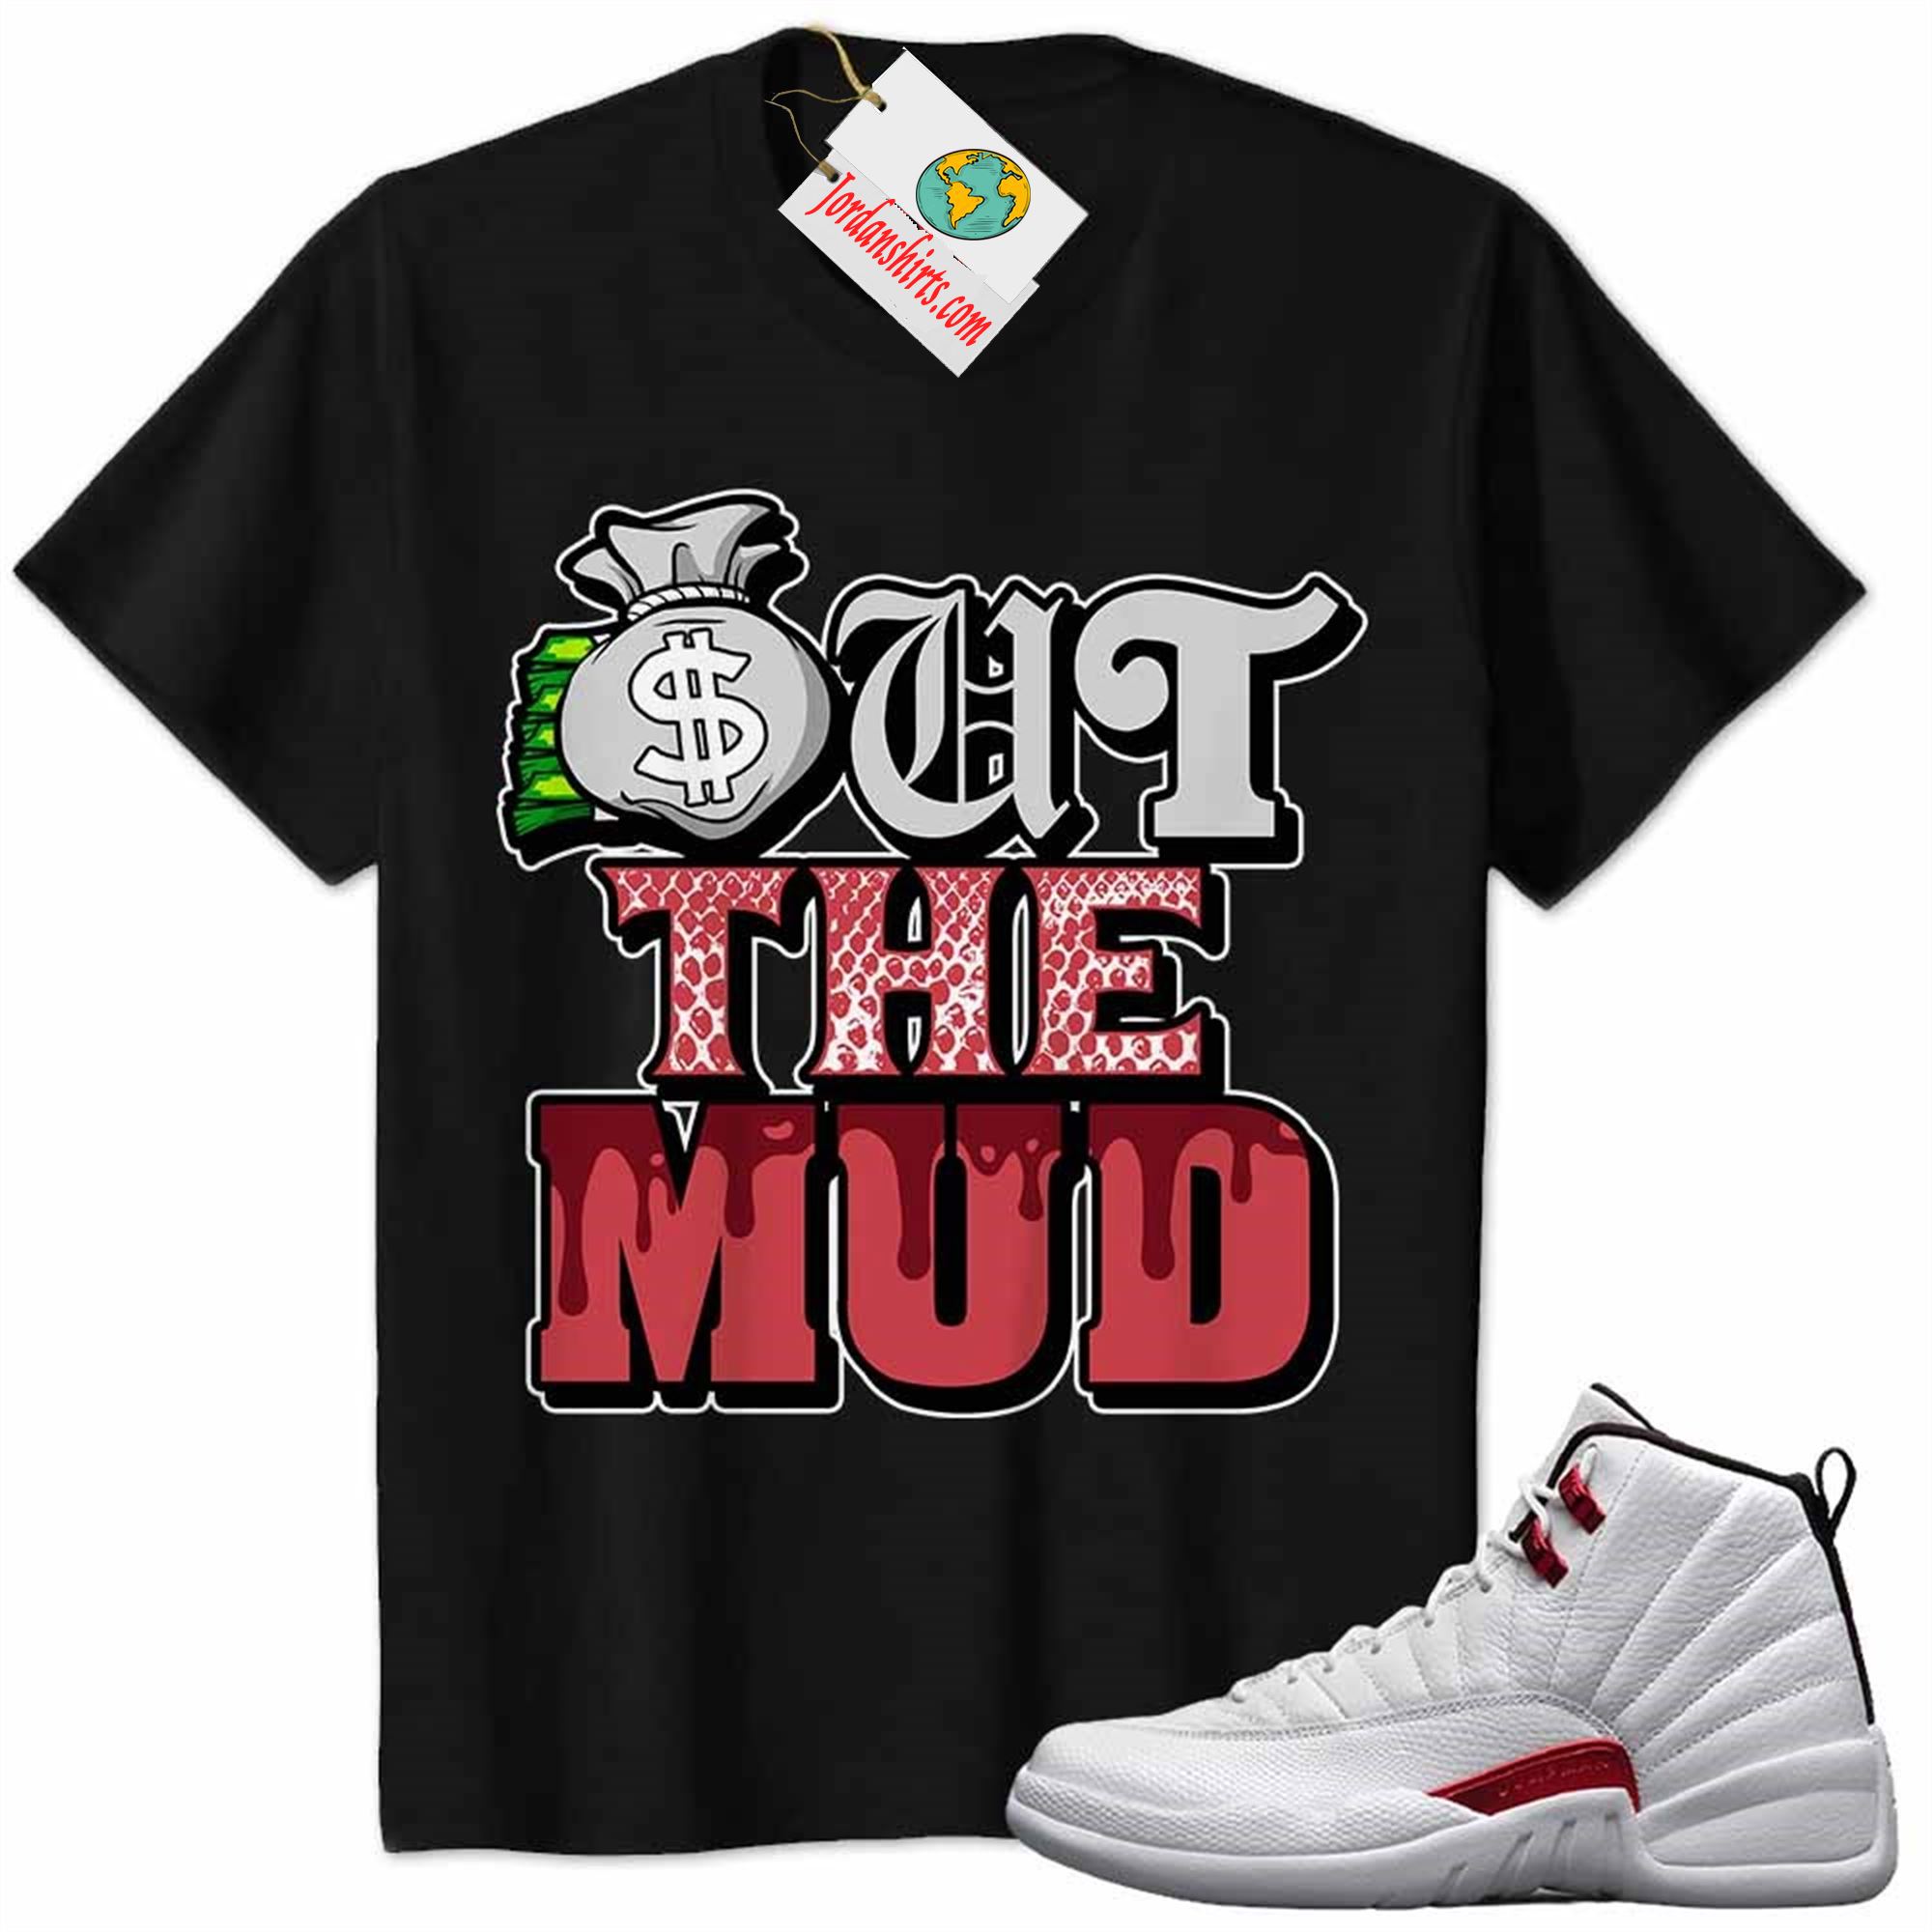 Jordan 12 Shirt, Jordan 12 Twist Shirt Out The Mud Money Bag Black Plus Size Up To 5xl